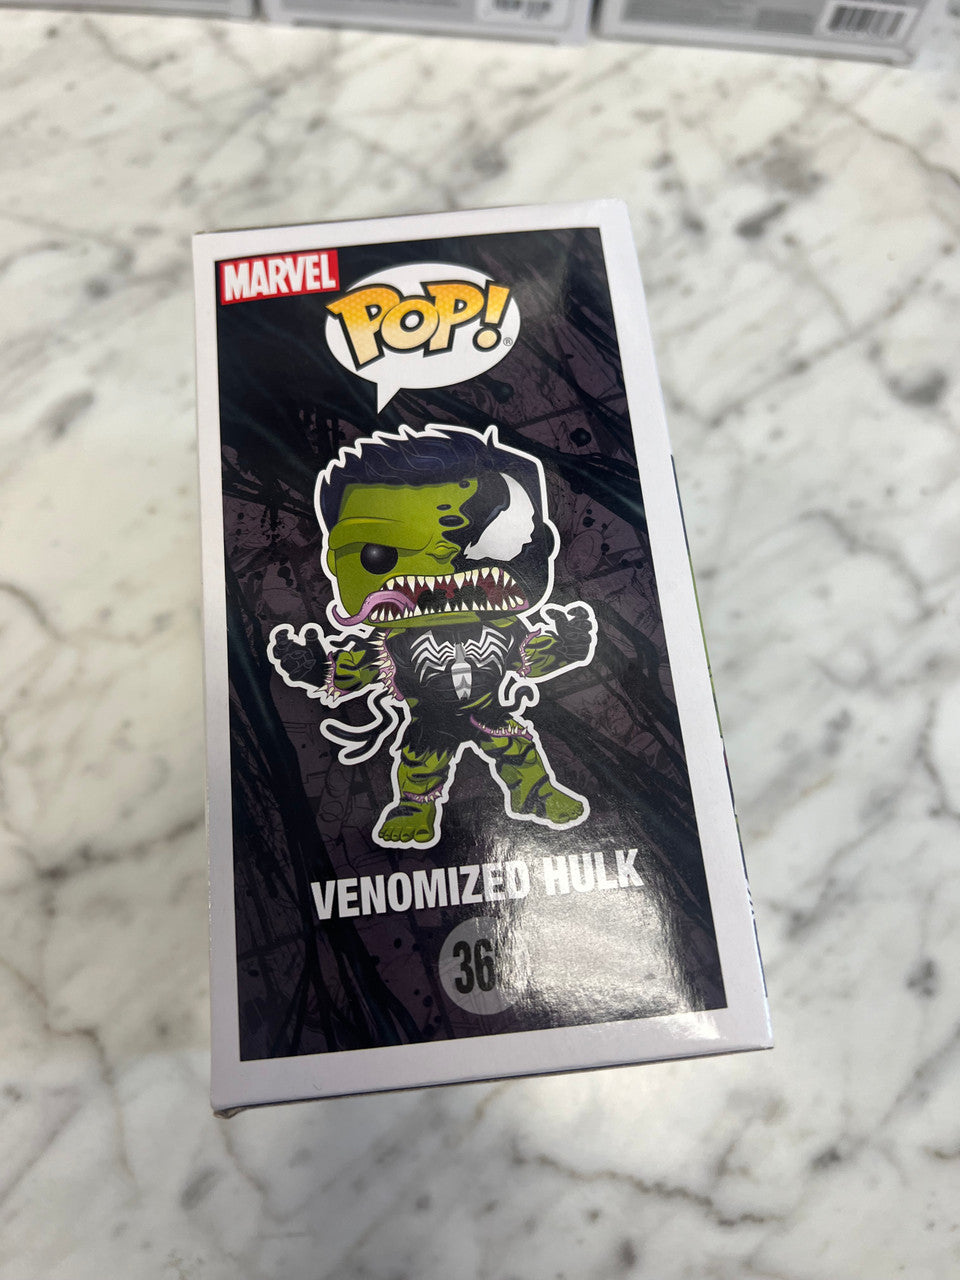 Funko Pop Venomized Hulk 366 Marvel Venom Bobble-Head Vinyl Figure